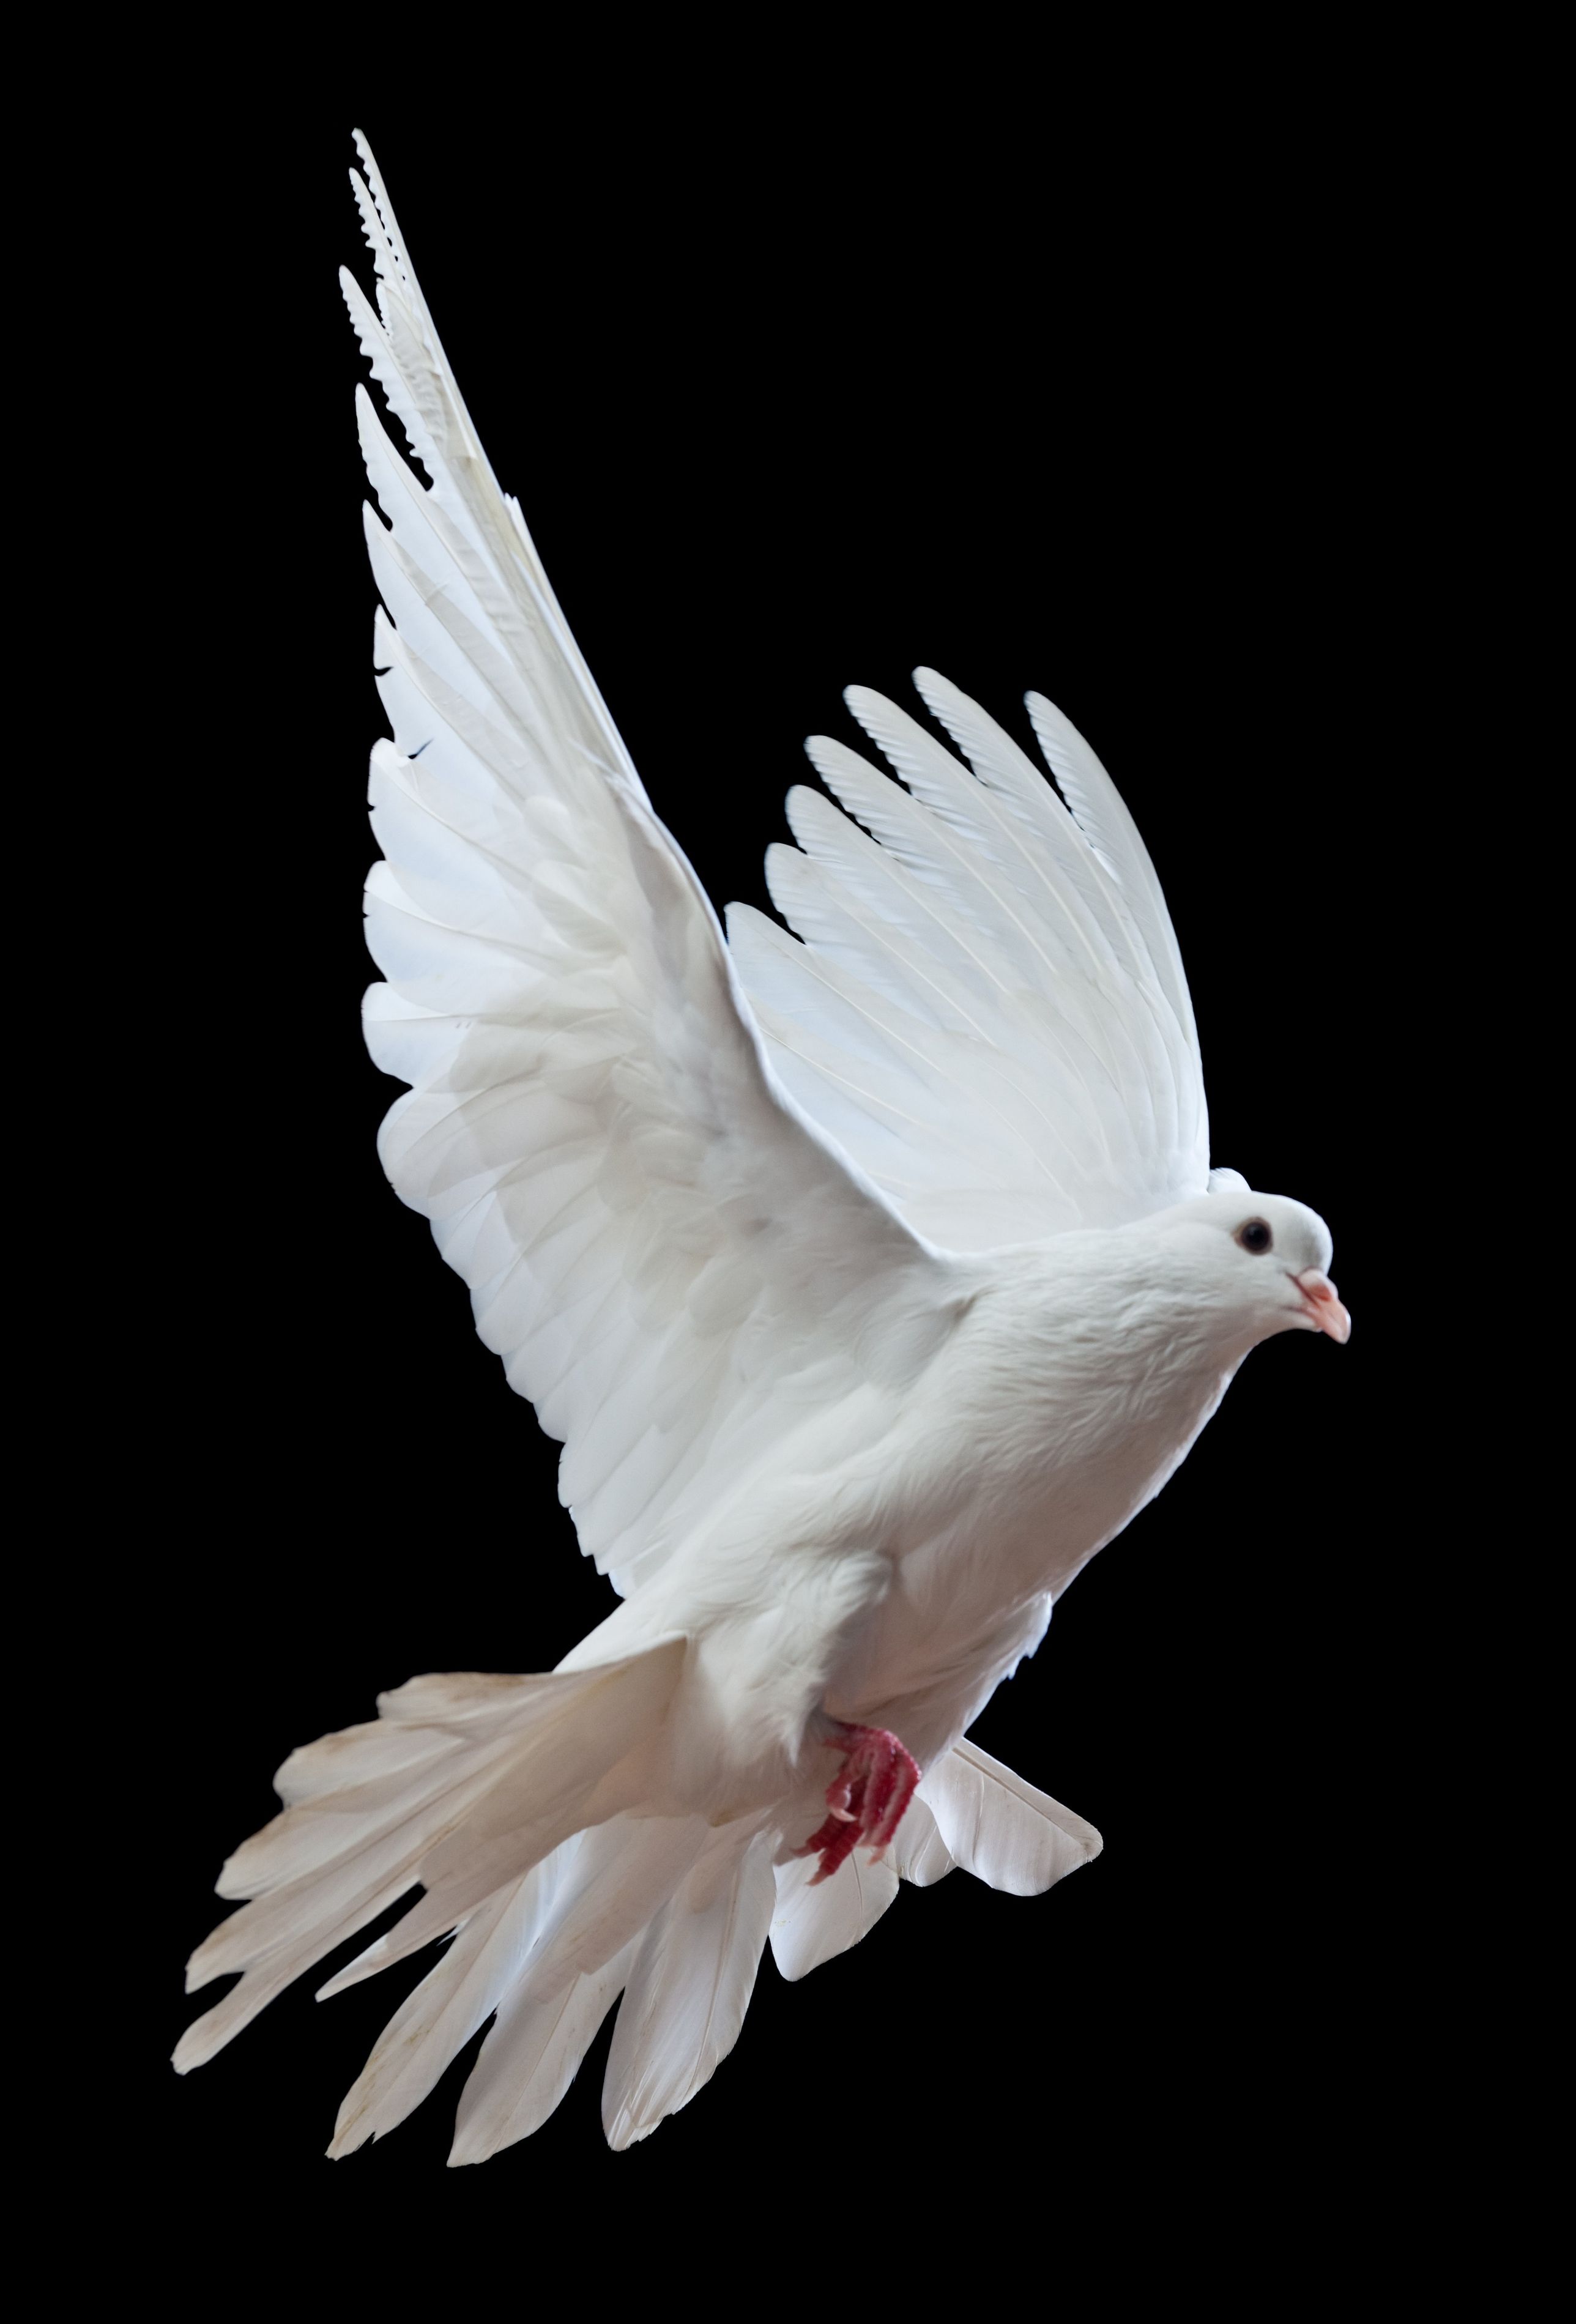 Photoshop Pro: Create A Spirit Dove Effect - 123RF